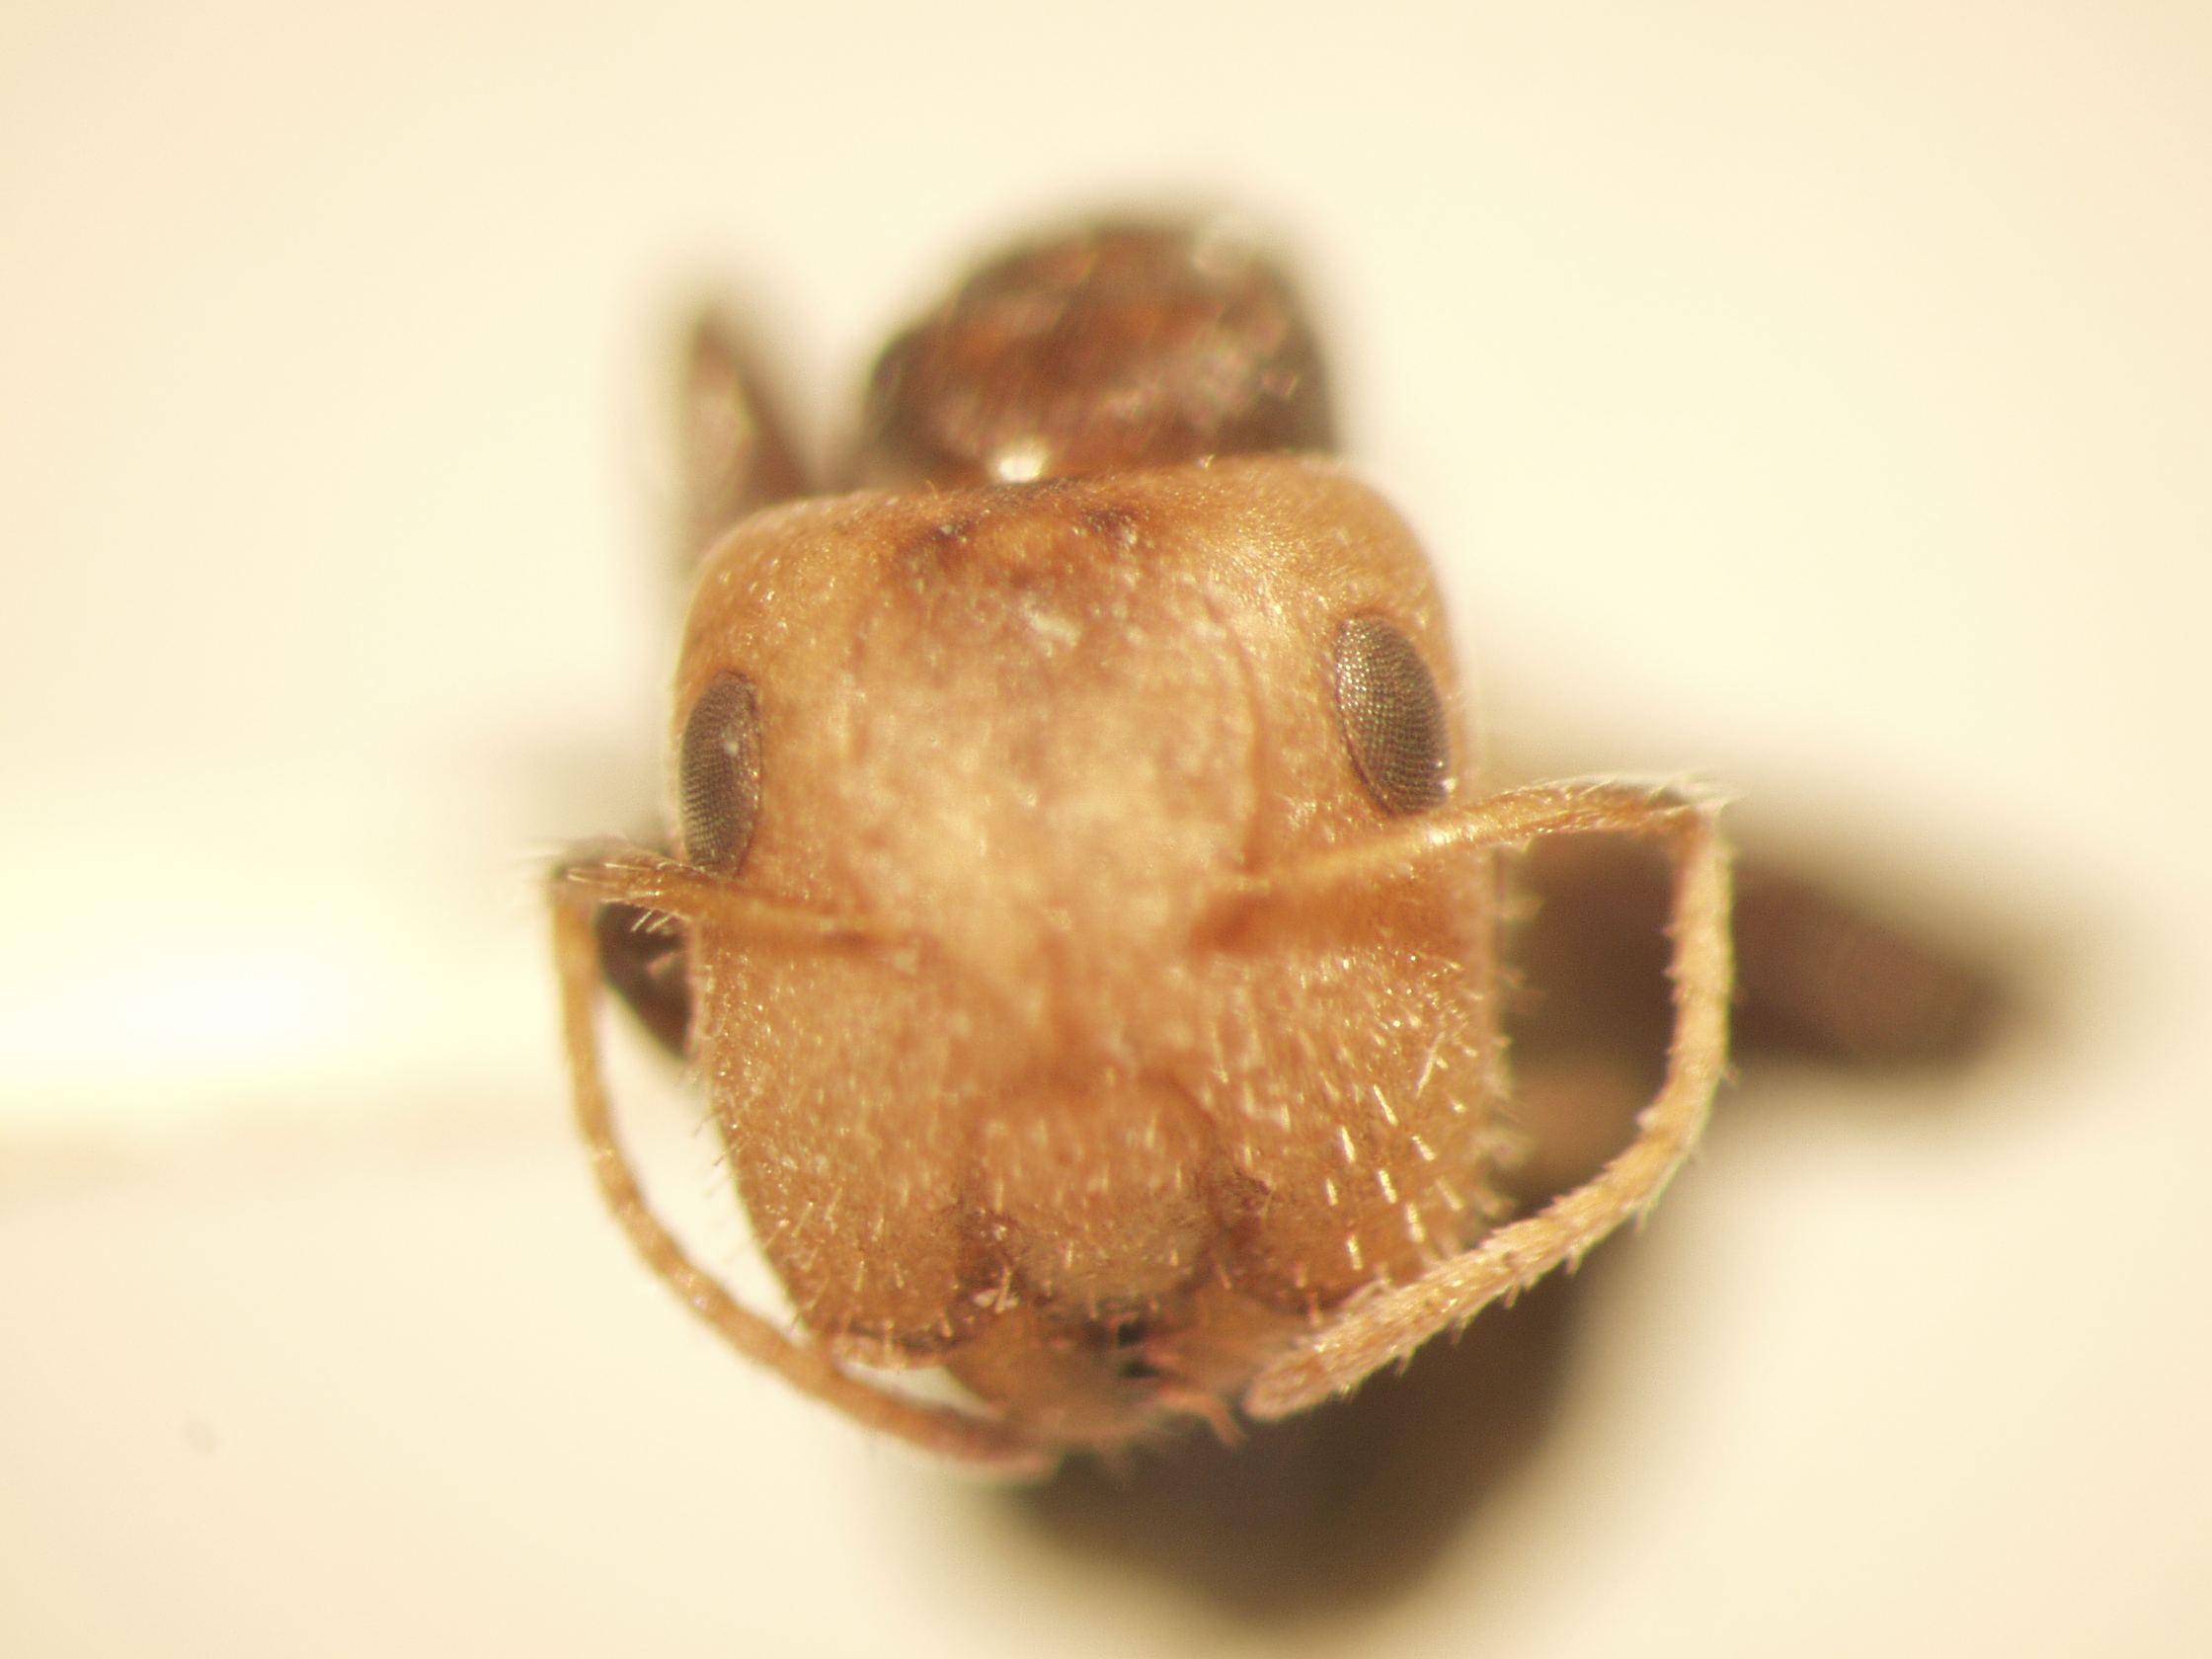 Camponotus 13 frontal